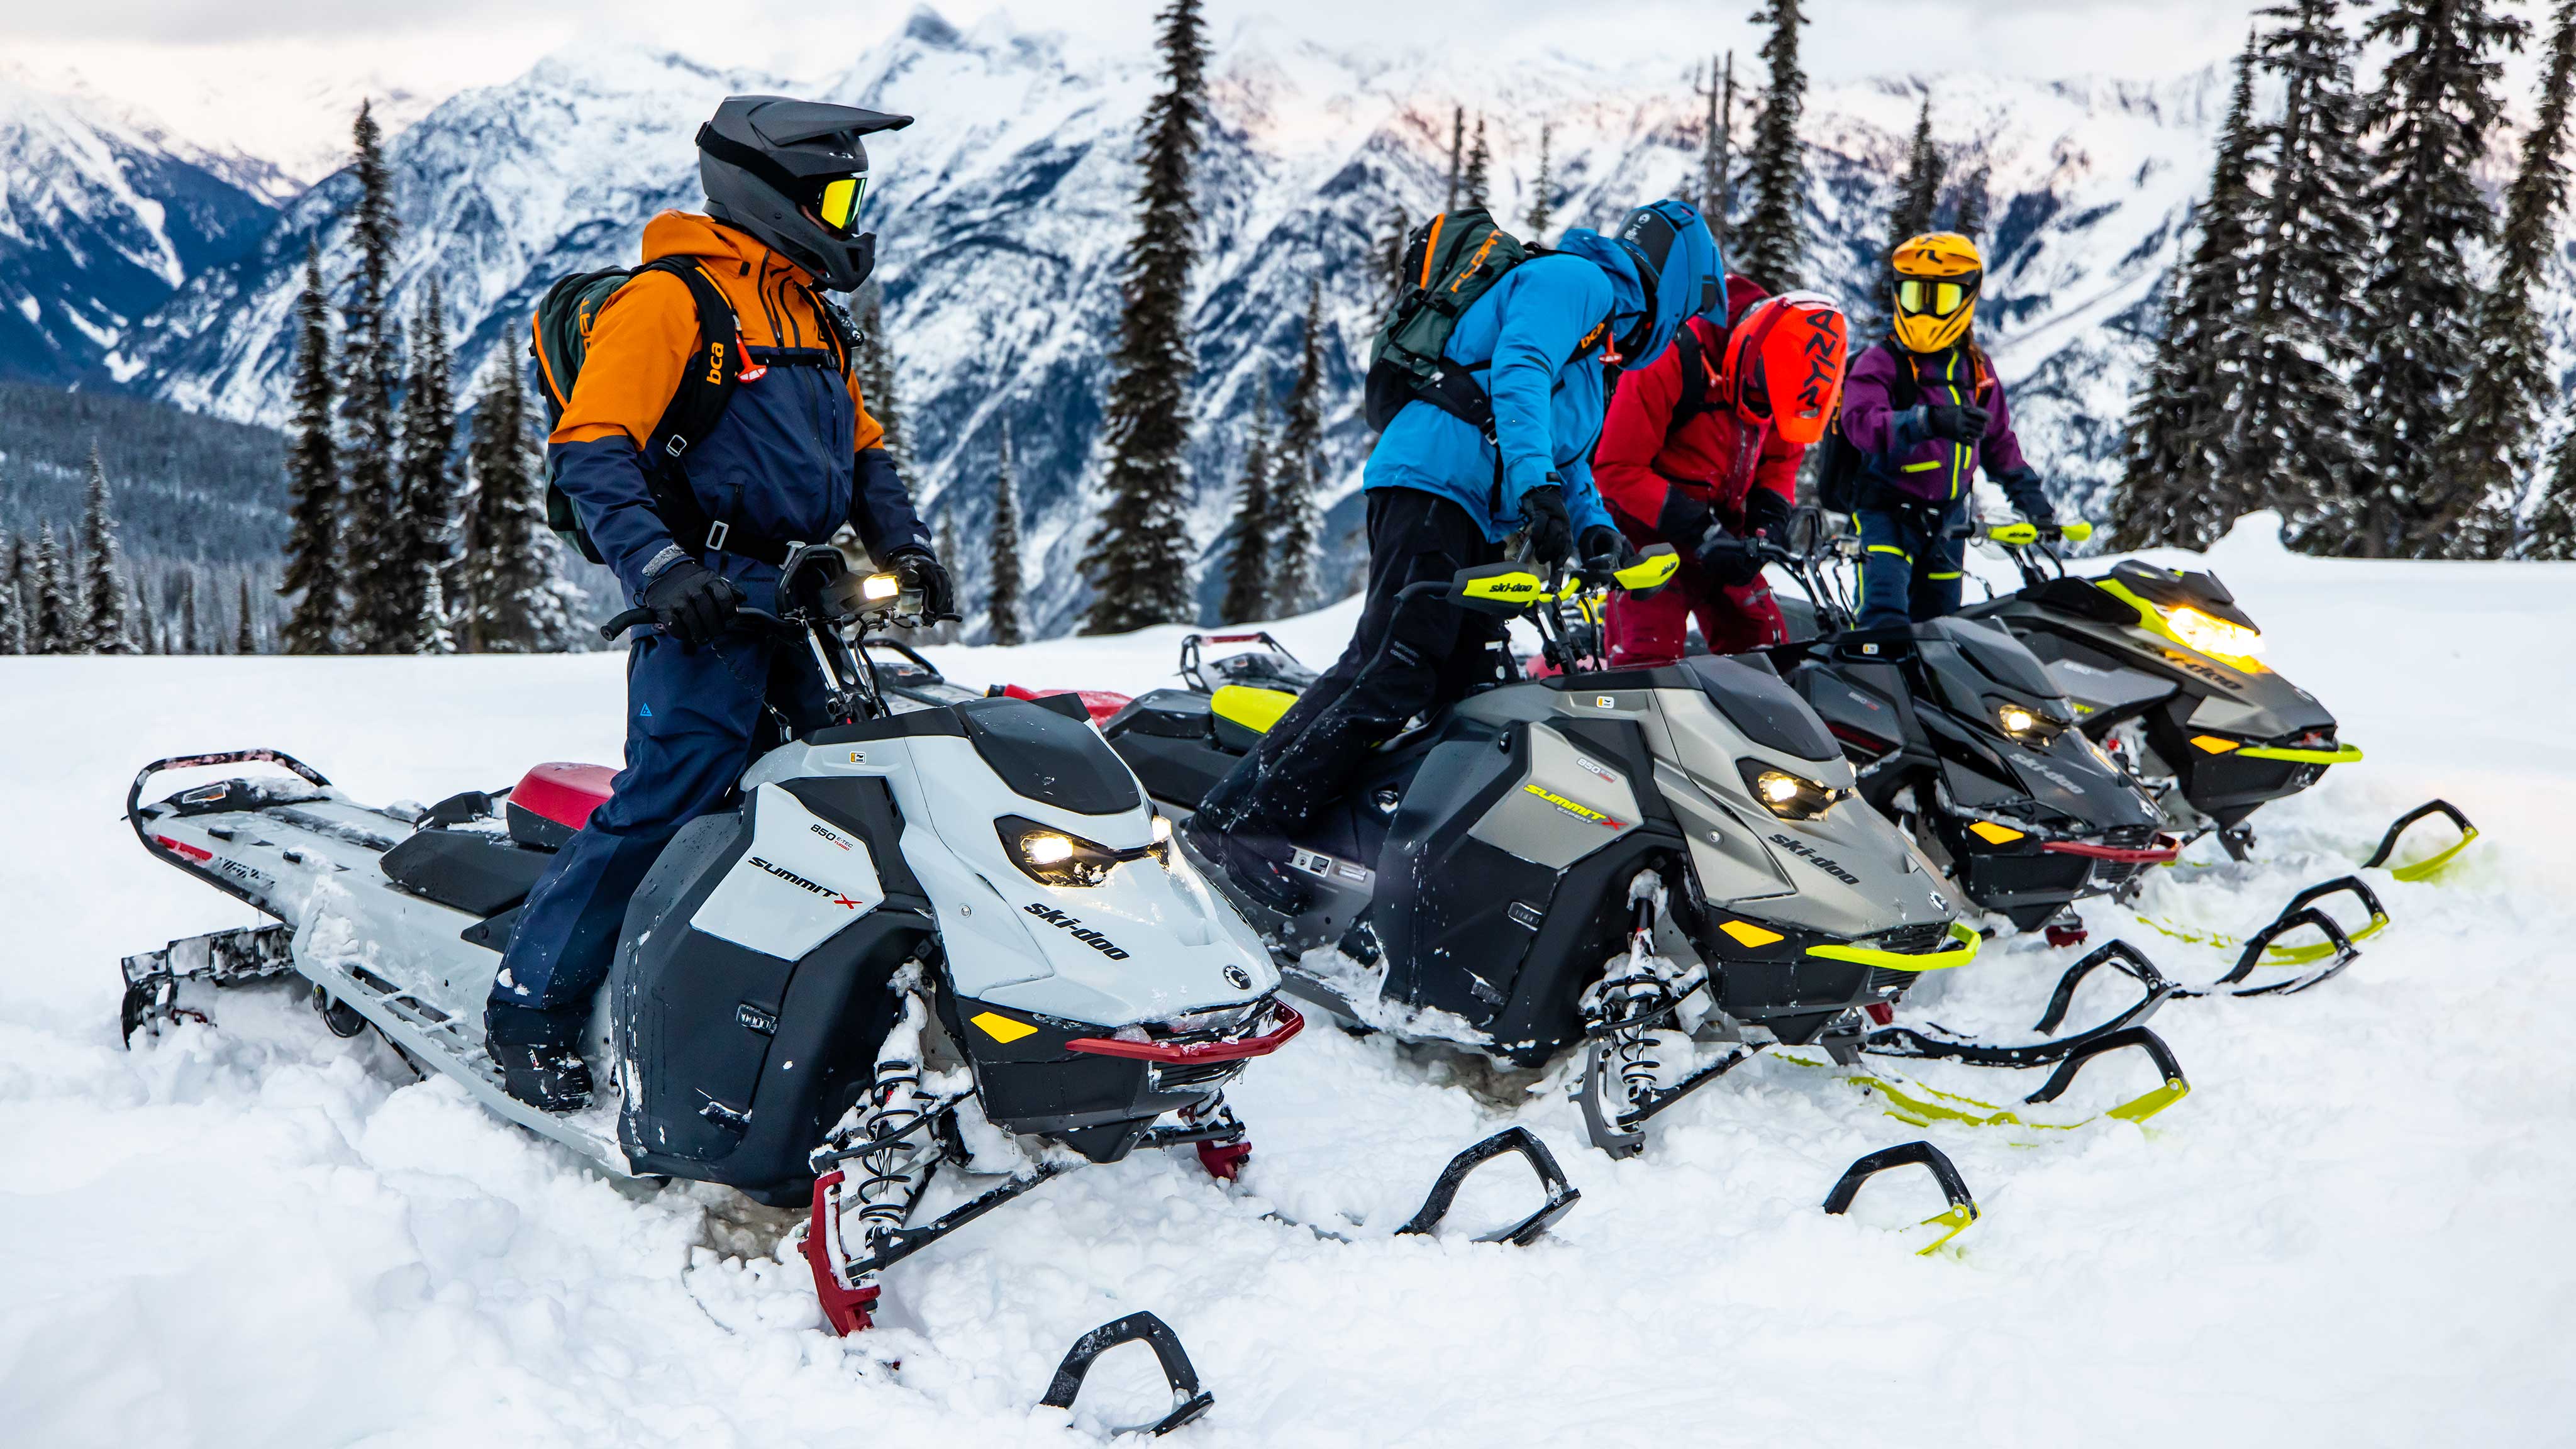 Group of riders on their Ski-Doo snowmobiles